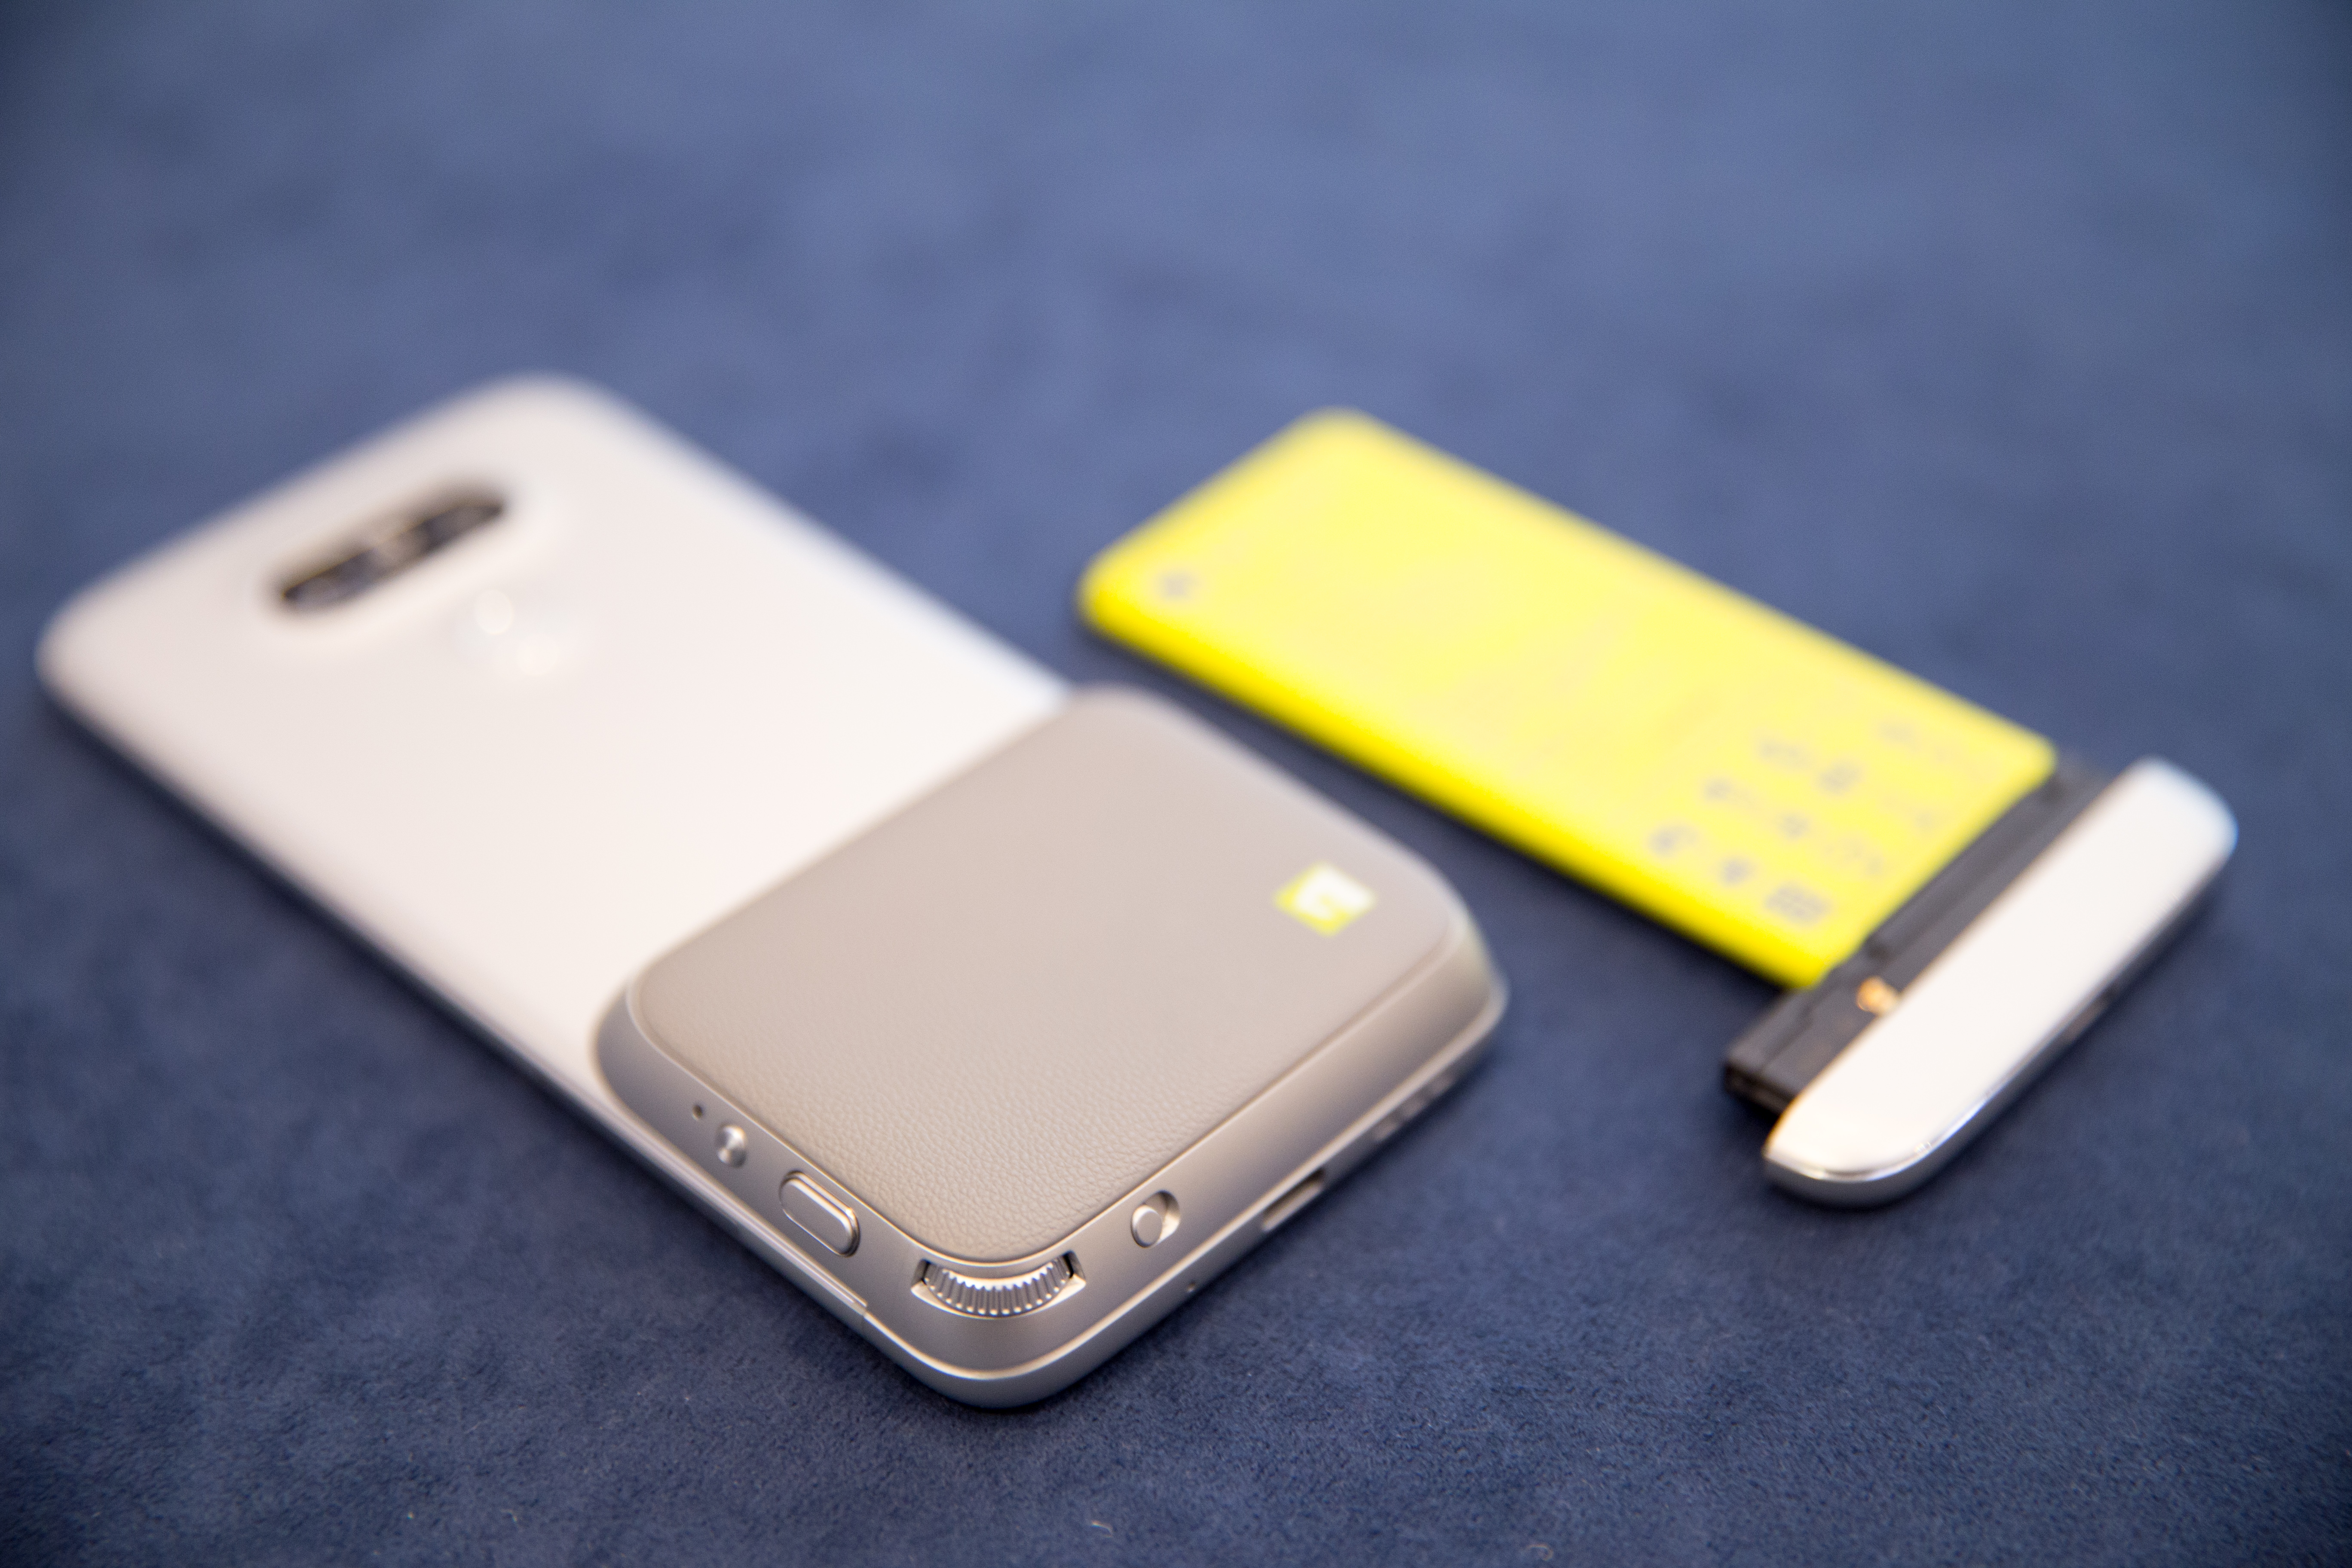 Every Angle Of The Modular LG G5 Smartphone | TechCrunch